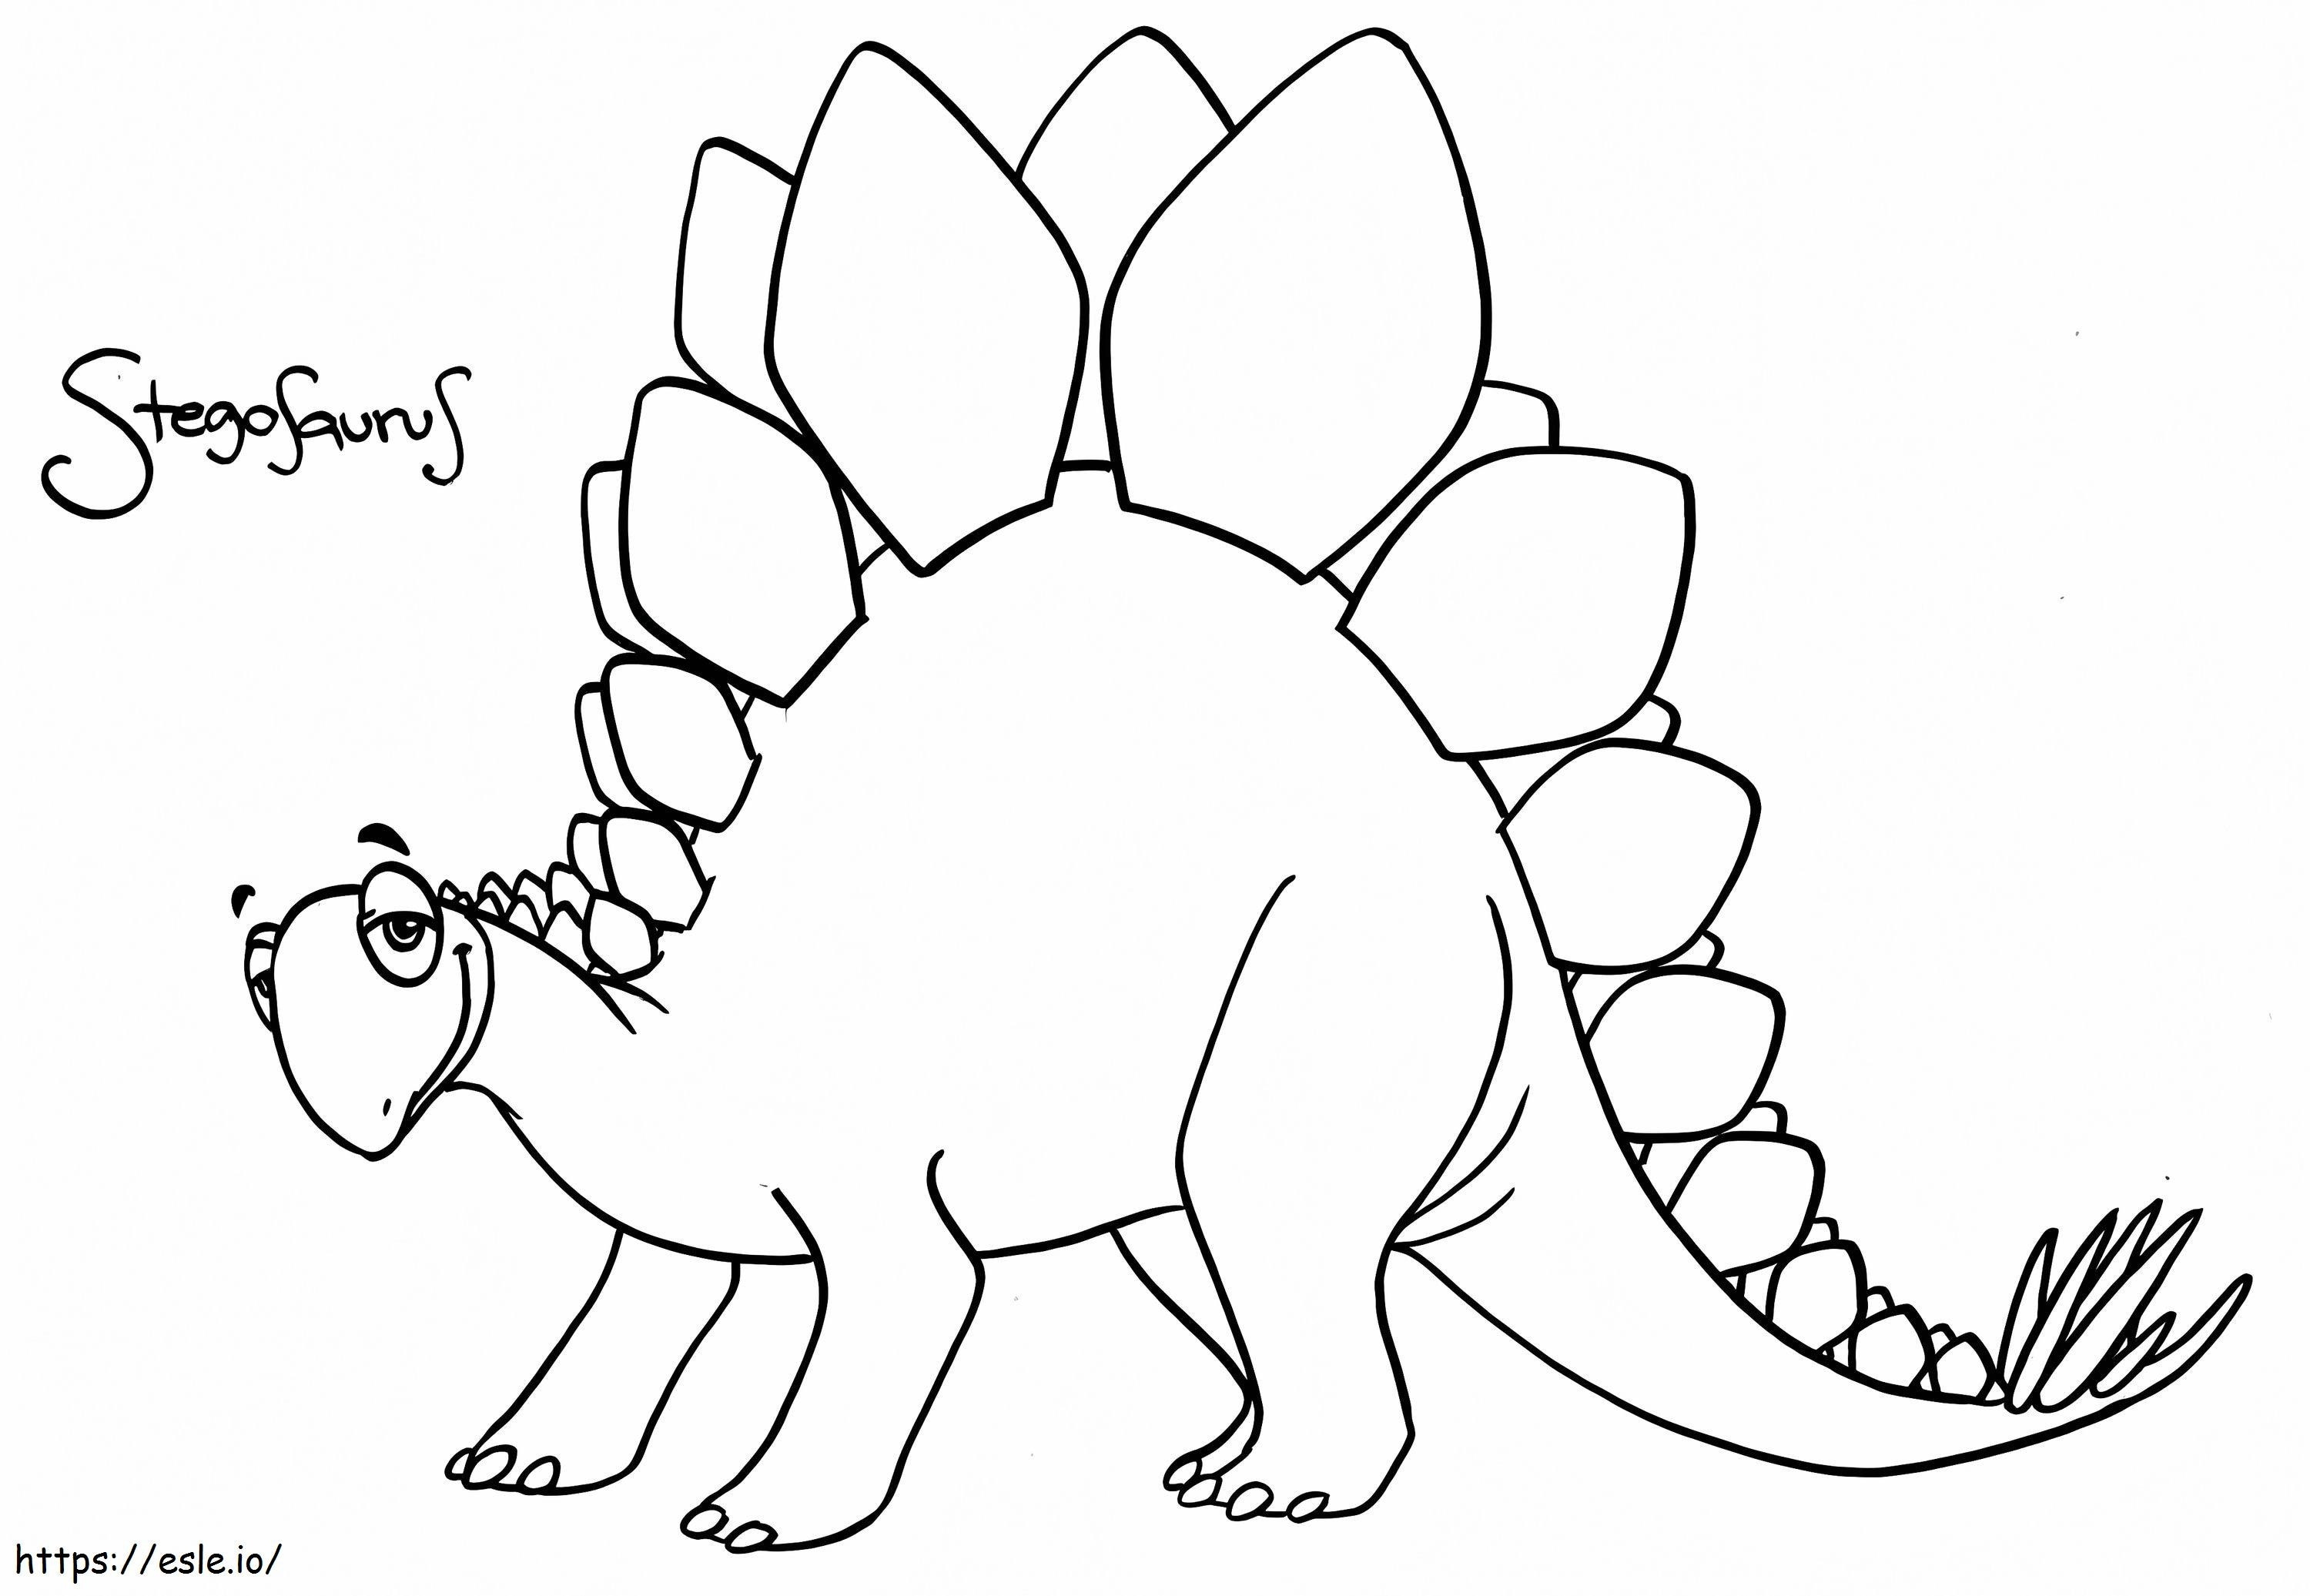 Smiling Stegosaurus coloring page